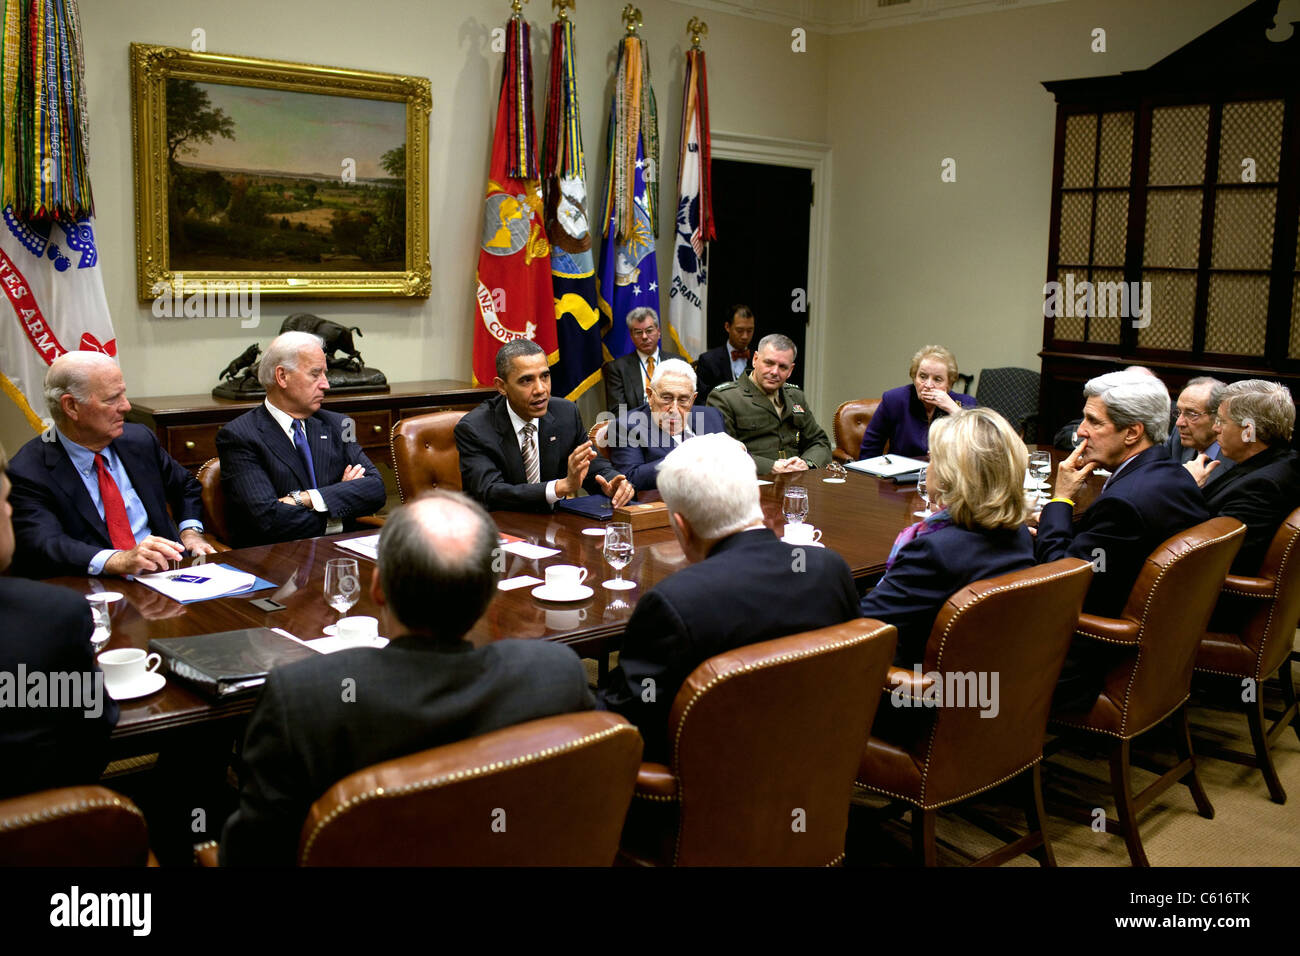 President Obama attends a START Treaty meeting hosted by VP Joe Biden. Former Secretaries of State attended including James Baker Henry A. Kissinger Madeleine Albright. Nov. 18 2010. (BSWH 2011 8 294) Stock Photo